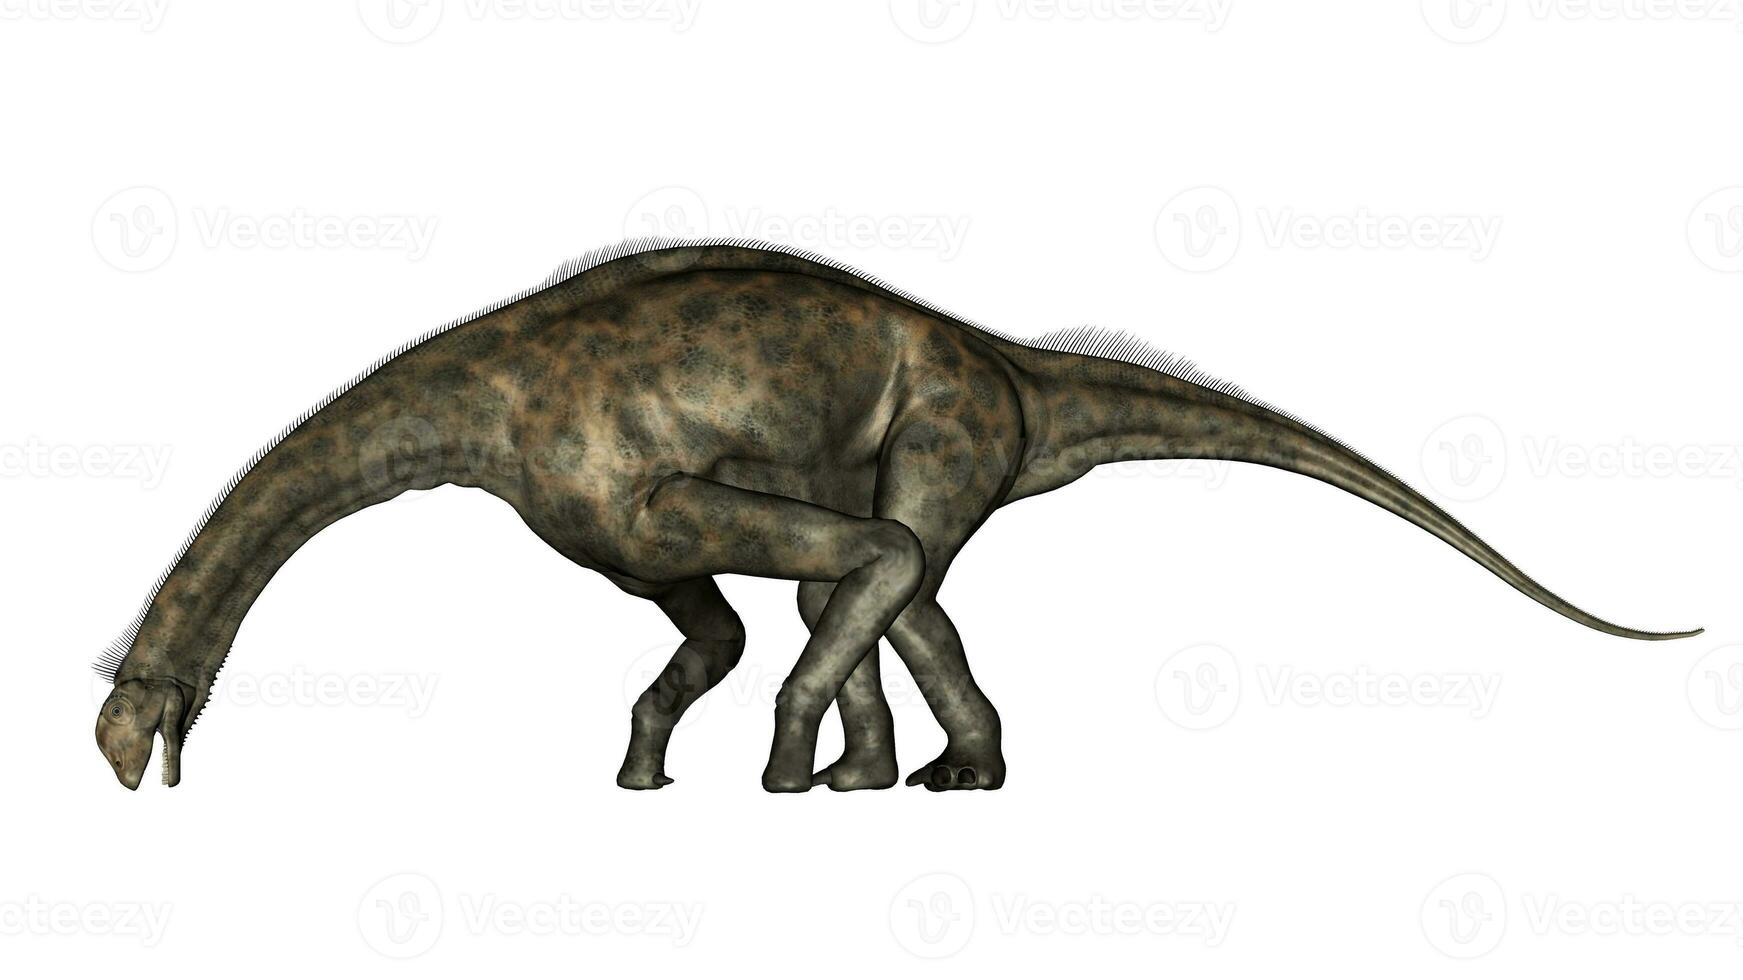 atlassauro dinossauro - 3d render foto